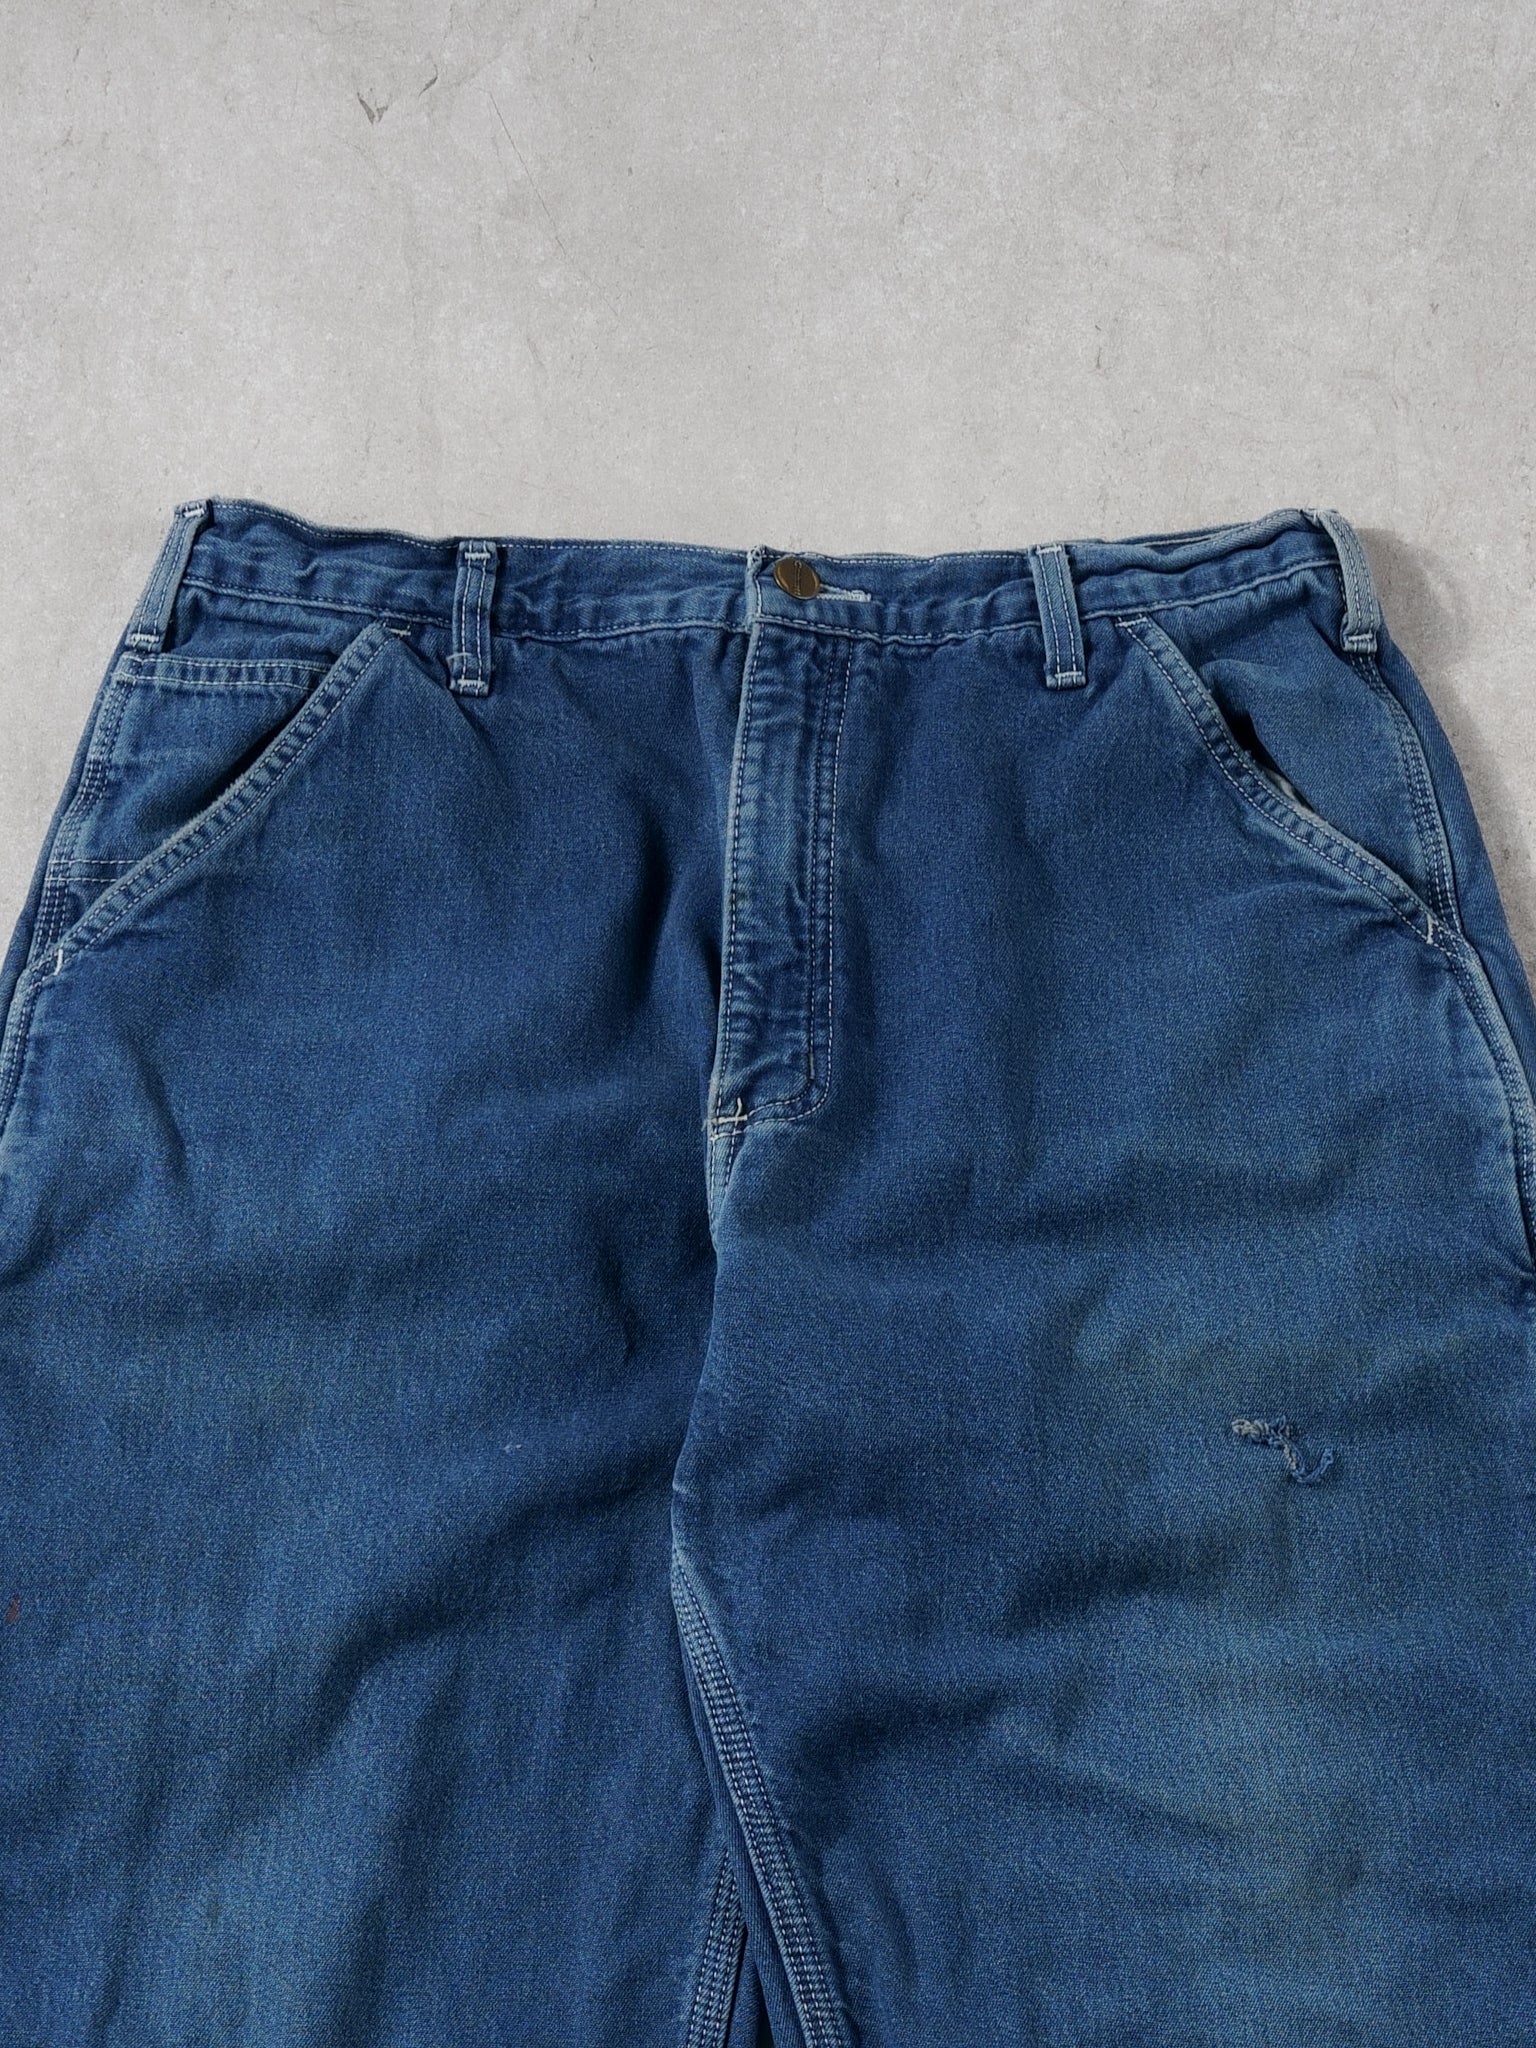 Vintage 90s Blue Carhartt Denim Lined Carpenter Pants (30x30)